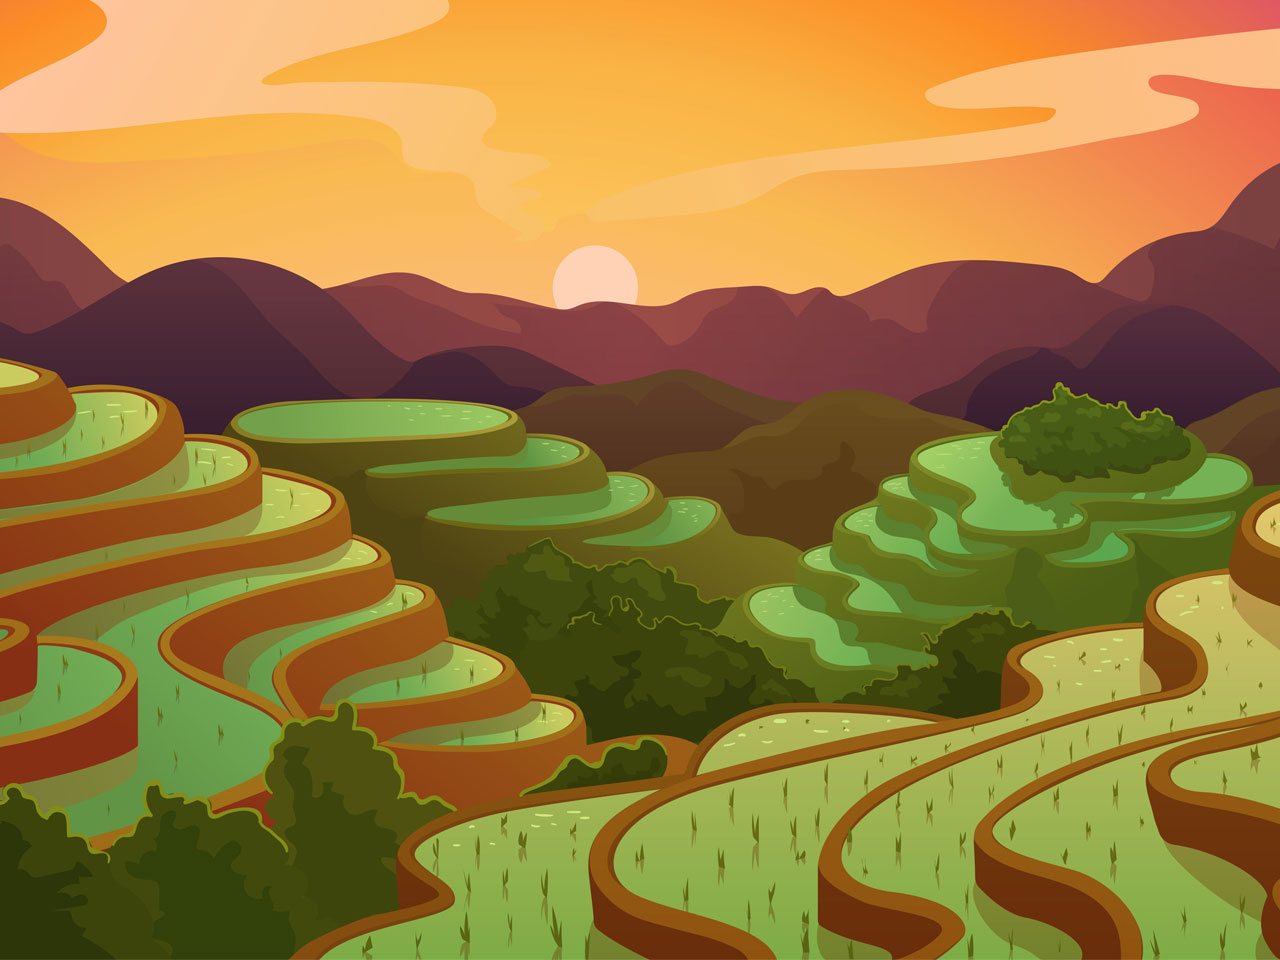 Philippine clipart cartoon illustration image landscape rice field terrace